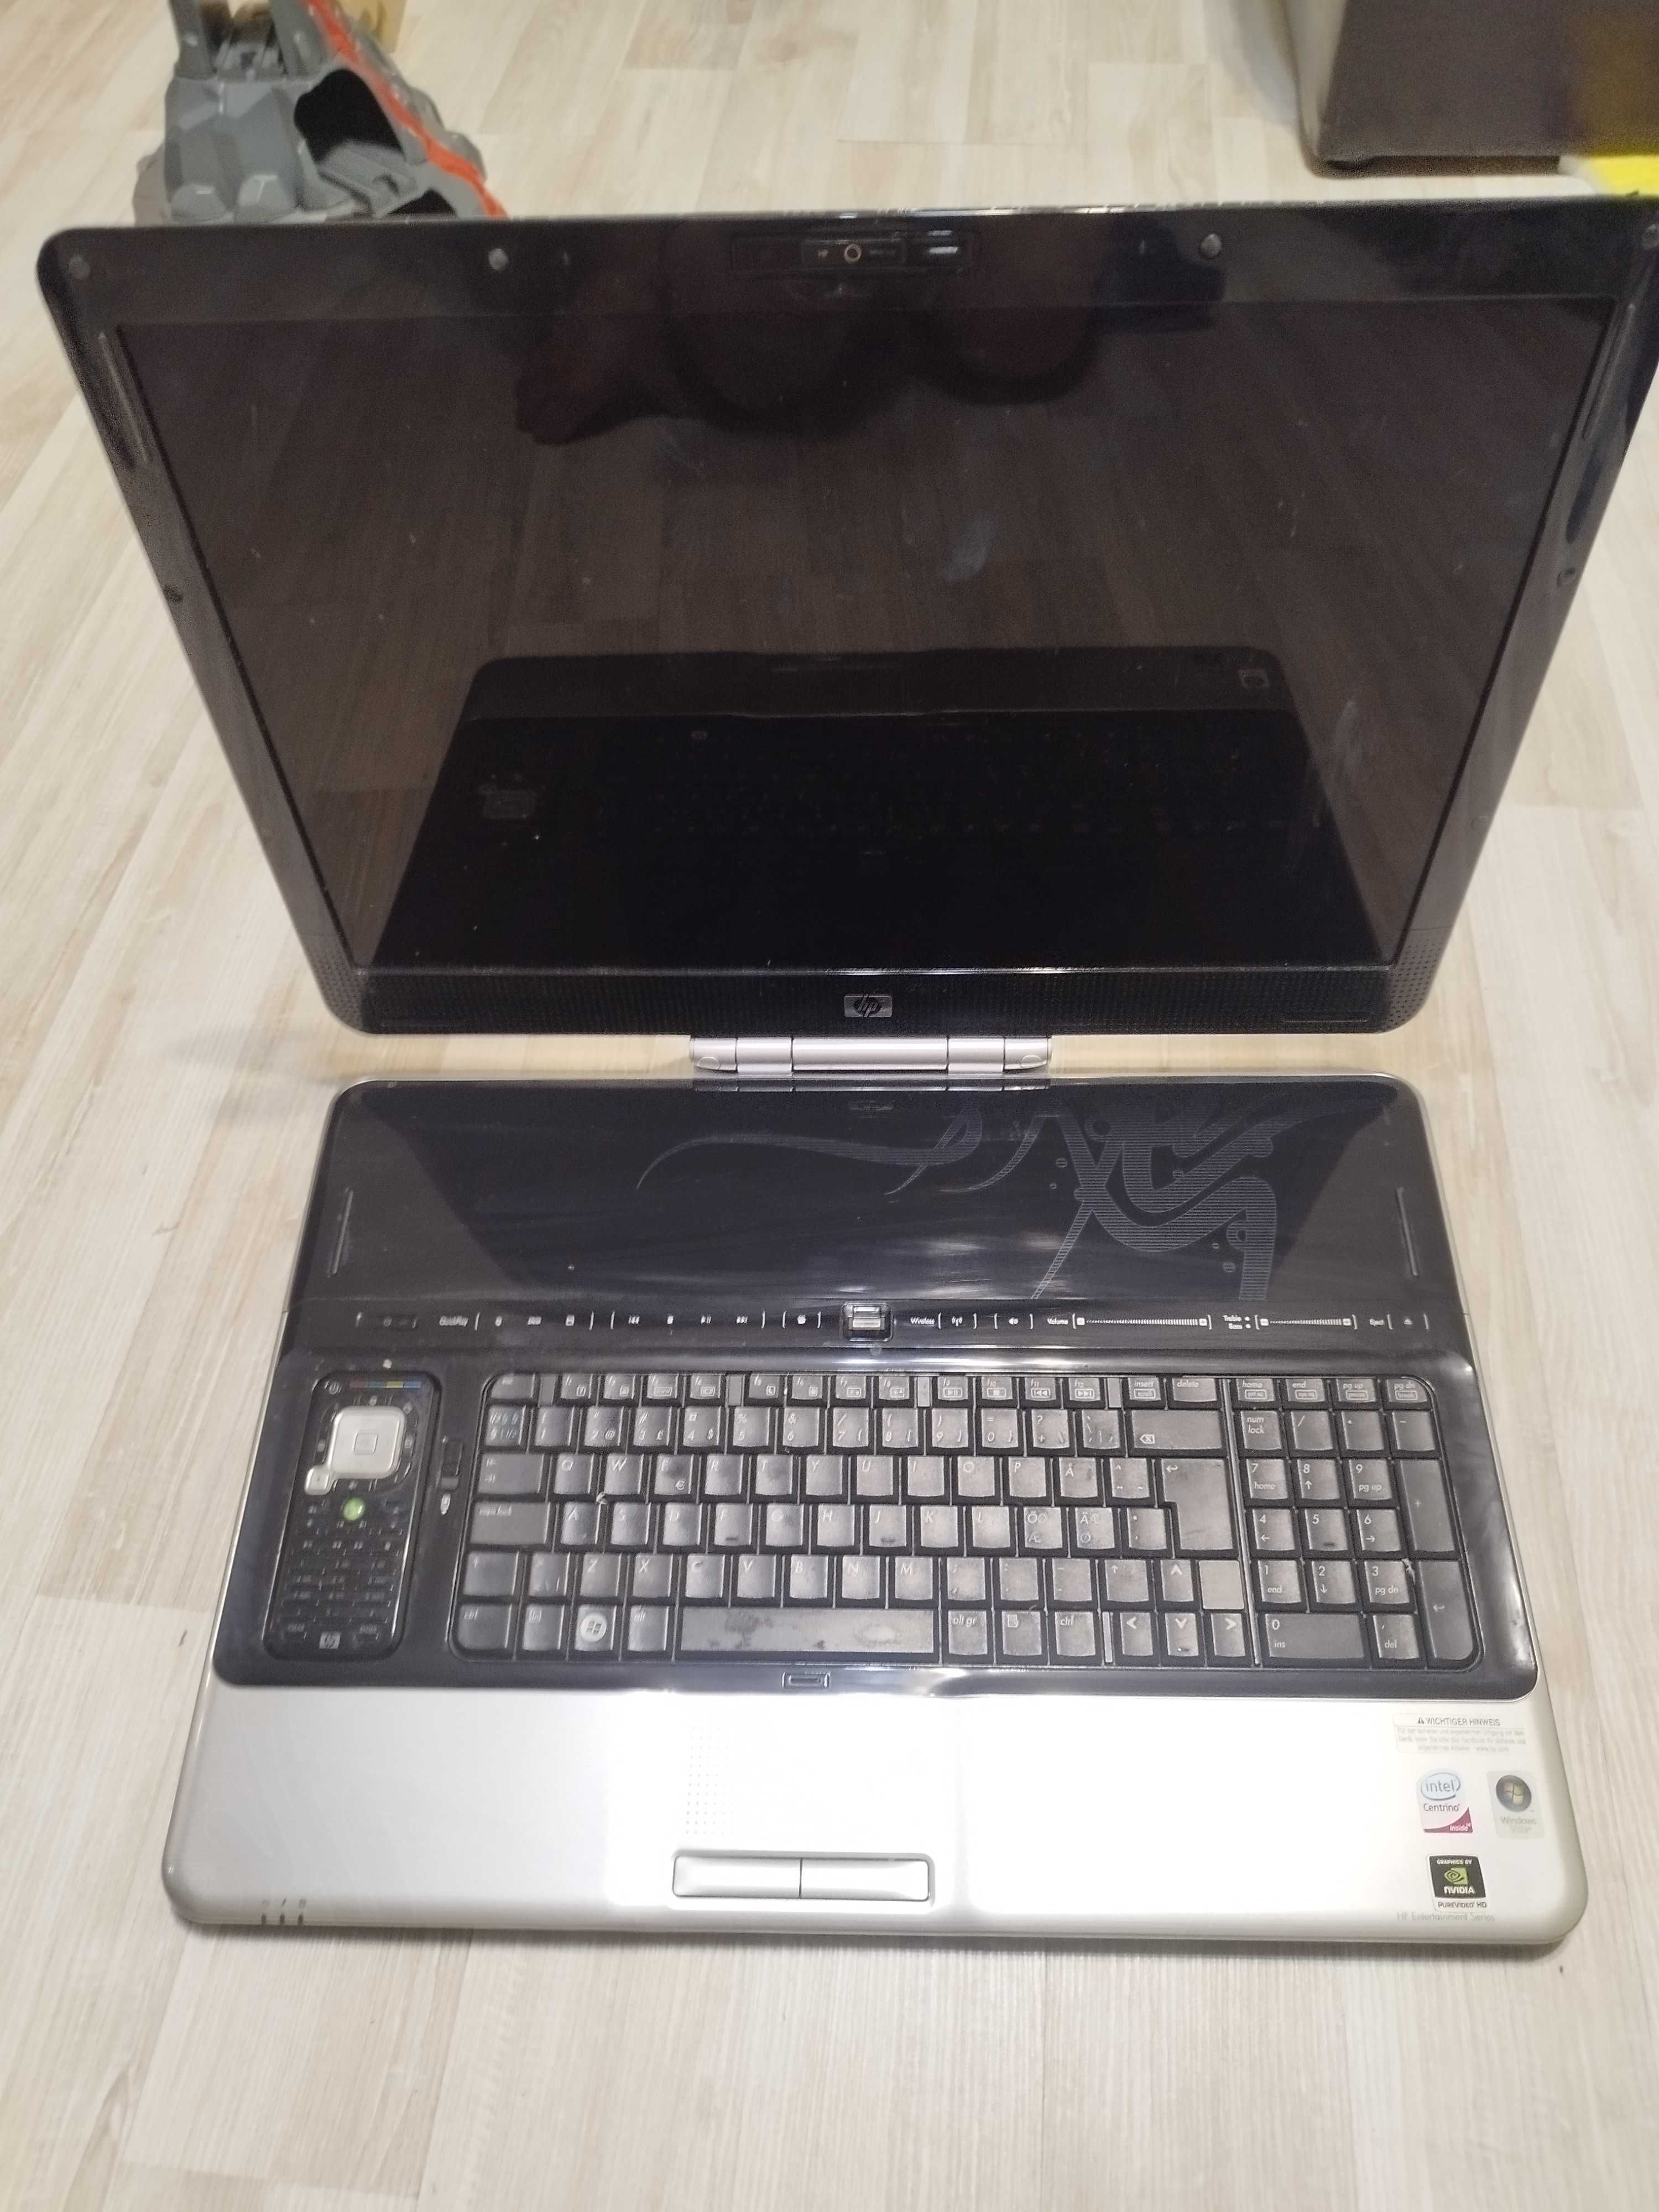 Cel mai mare laptop din lume! HDX9000 HP, 8 GB ram, SSD 500+ HDD 750